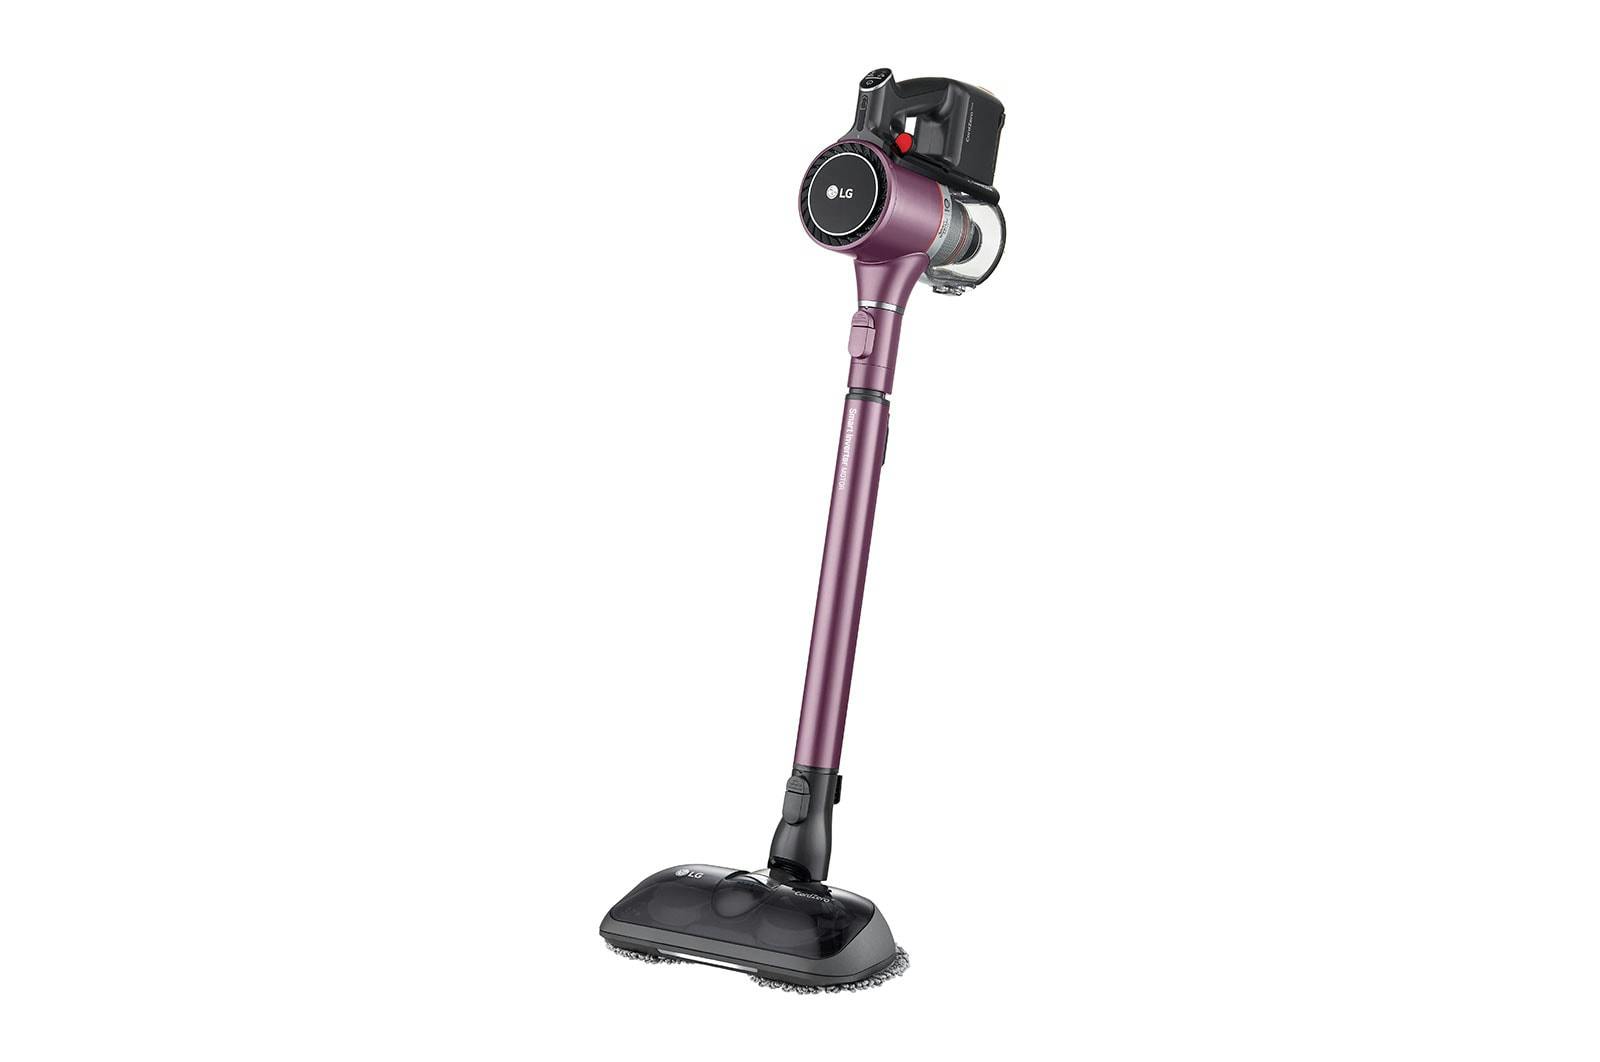 LG CordZero Kompressor with Power Mop & Wi-Fi Cordless Stick Vacuum Cleaner